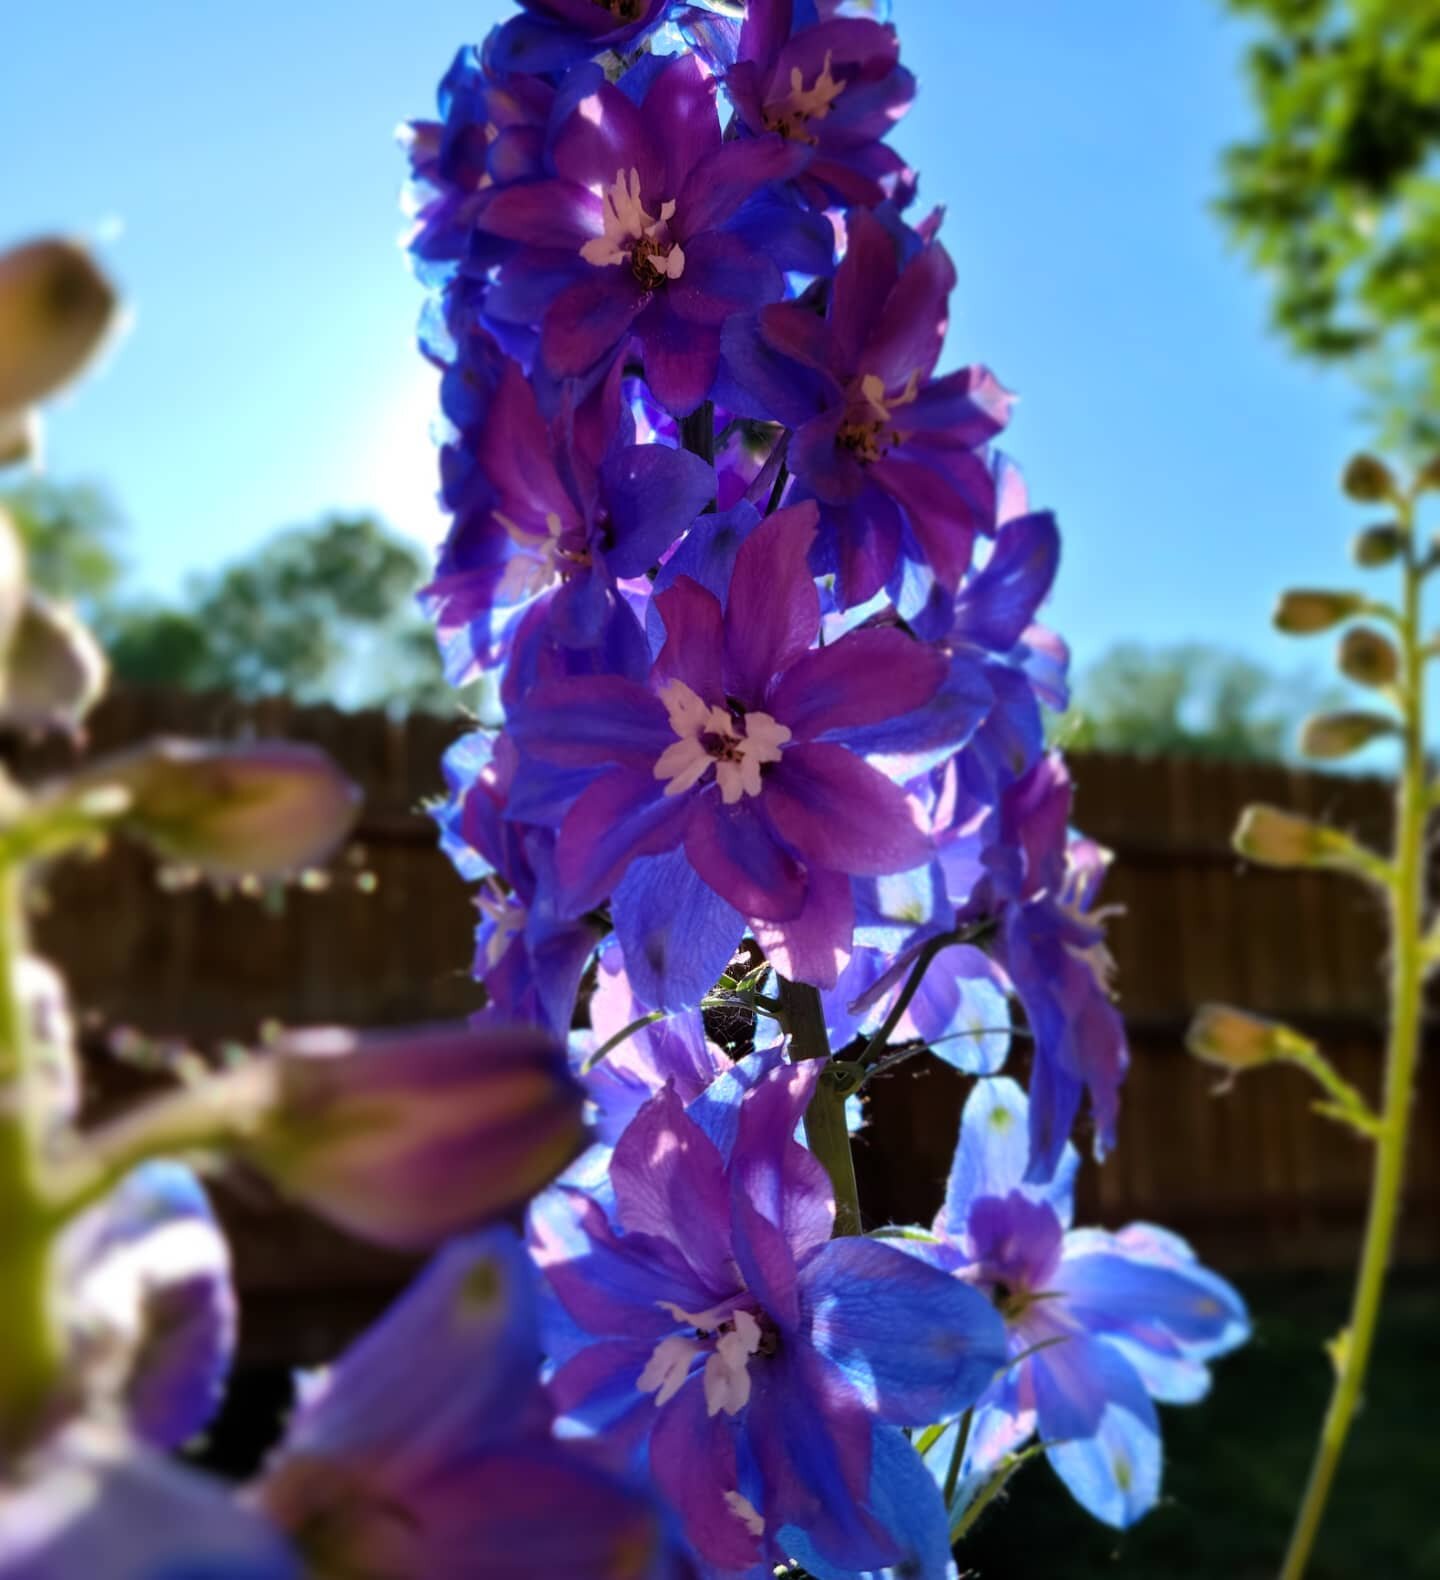 Backyard bliss
.
.
.
#flowers #sunshine #backyard #bliss  #purple